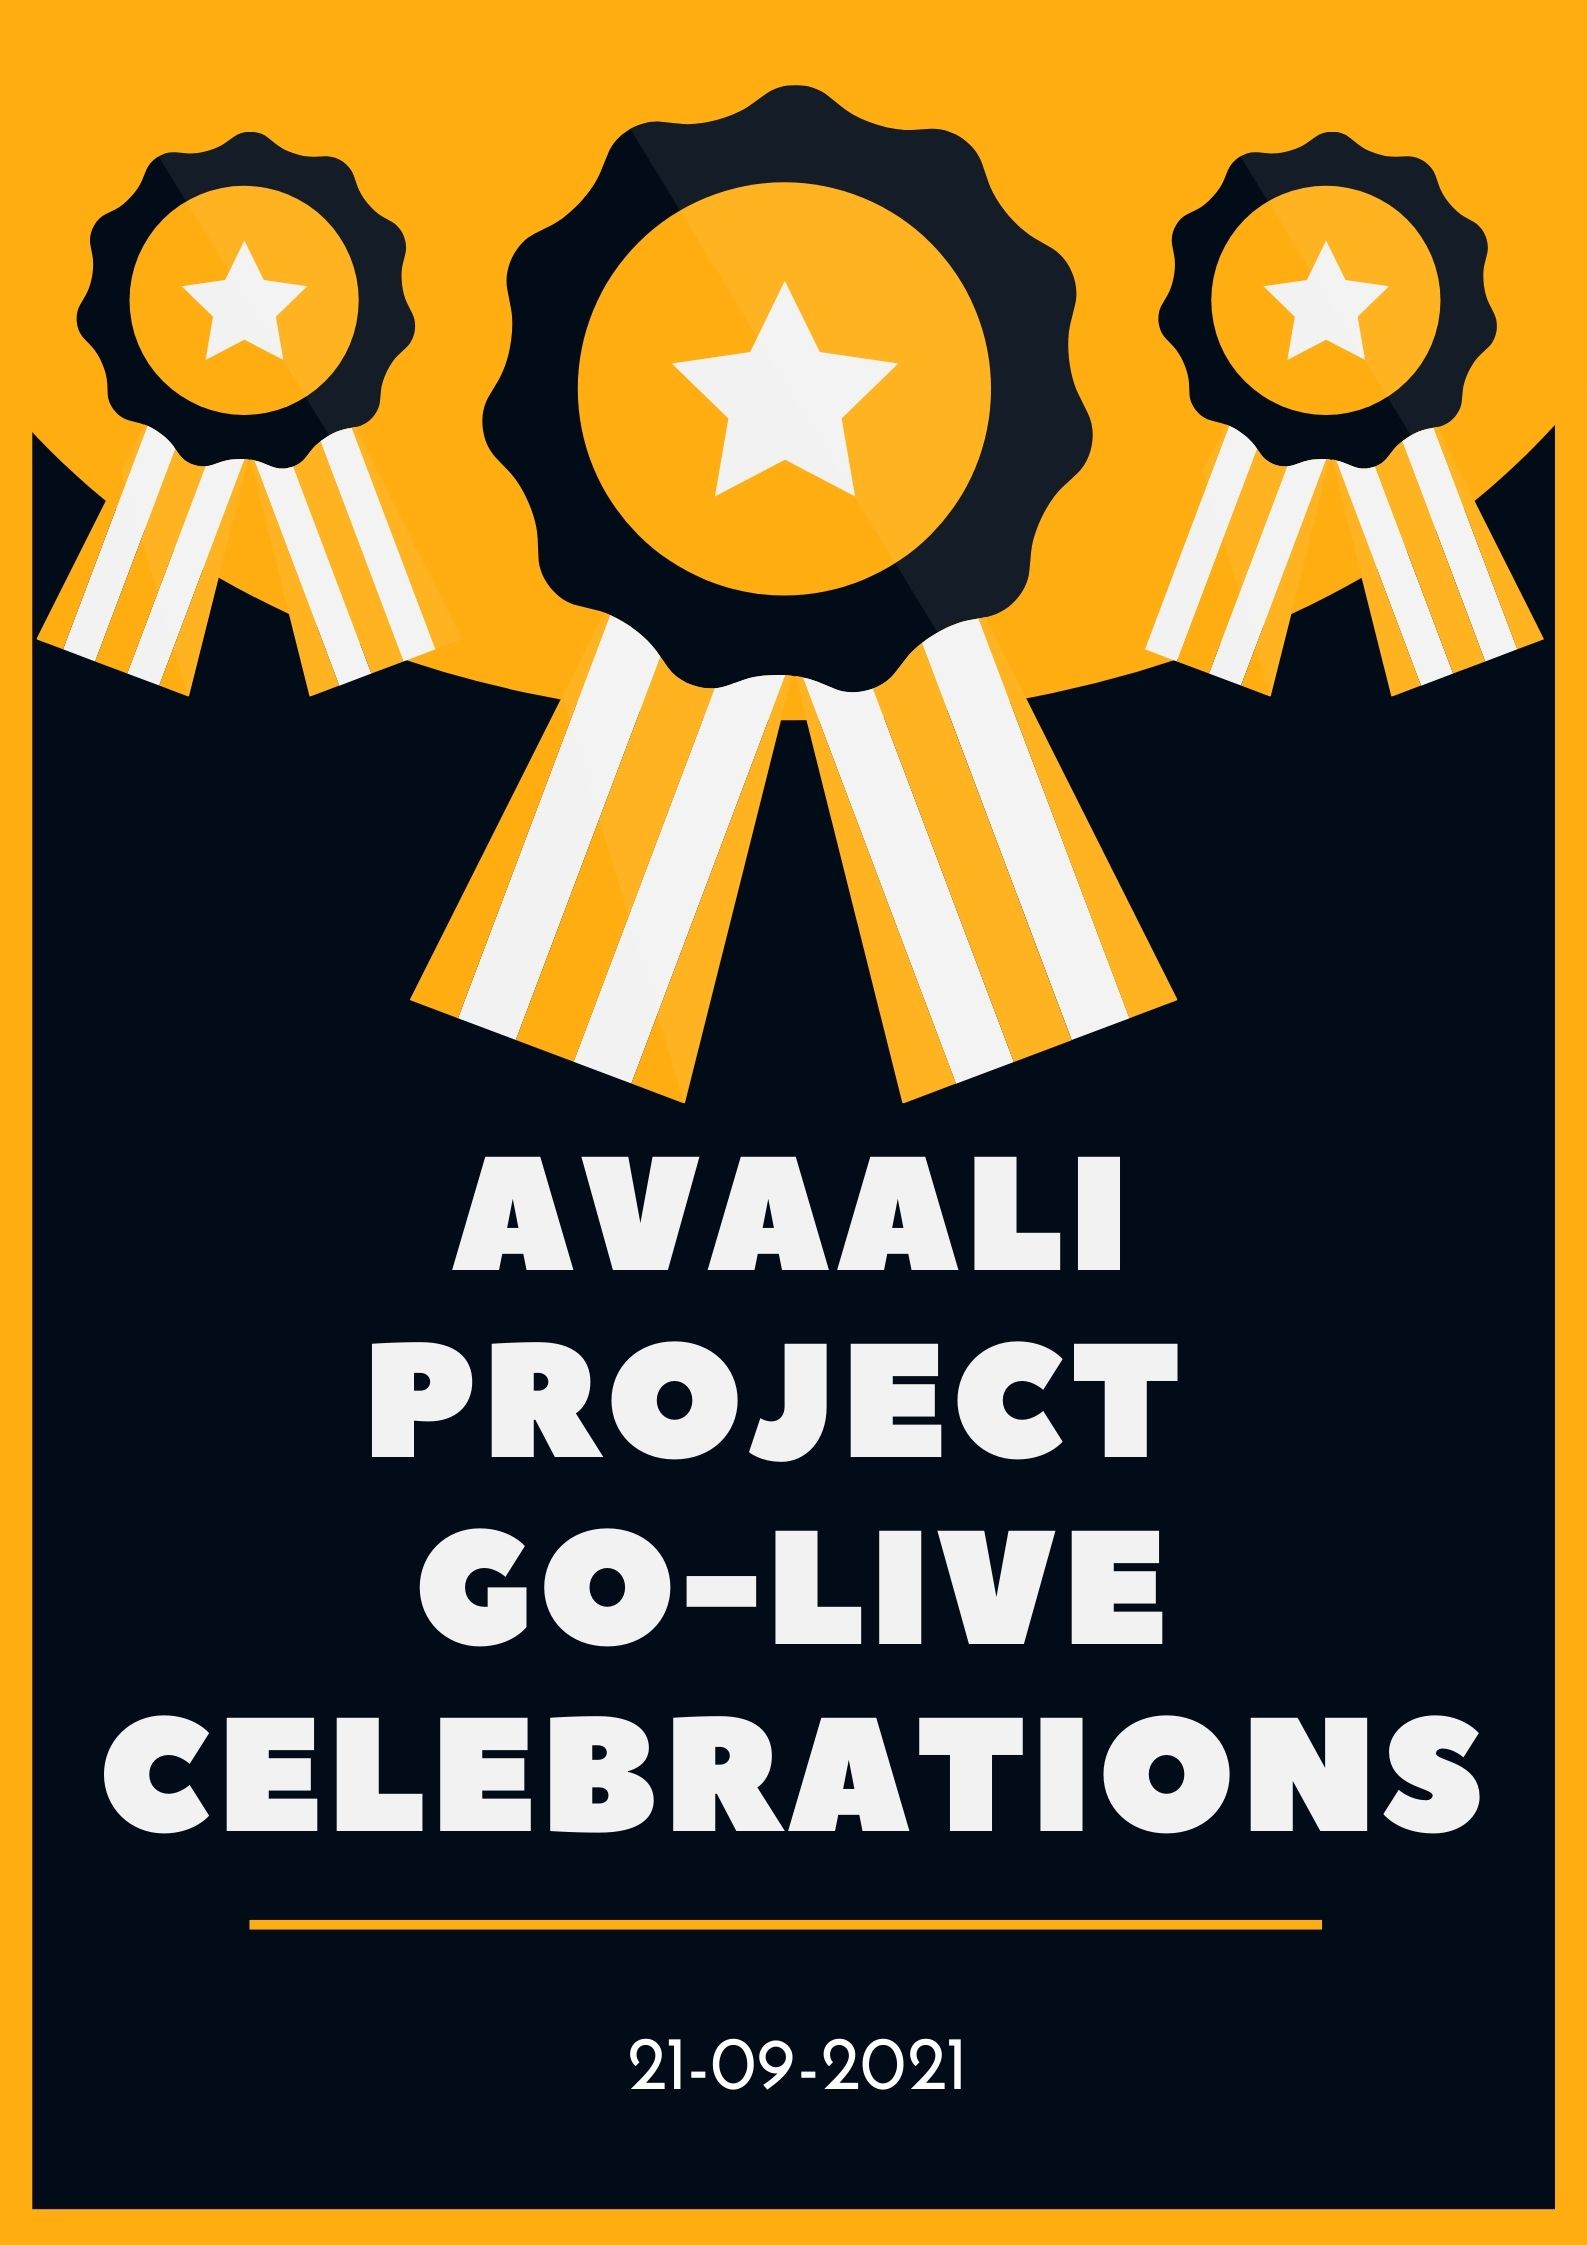 Avaali Project go-live celebrations